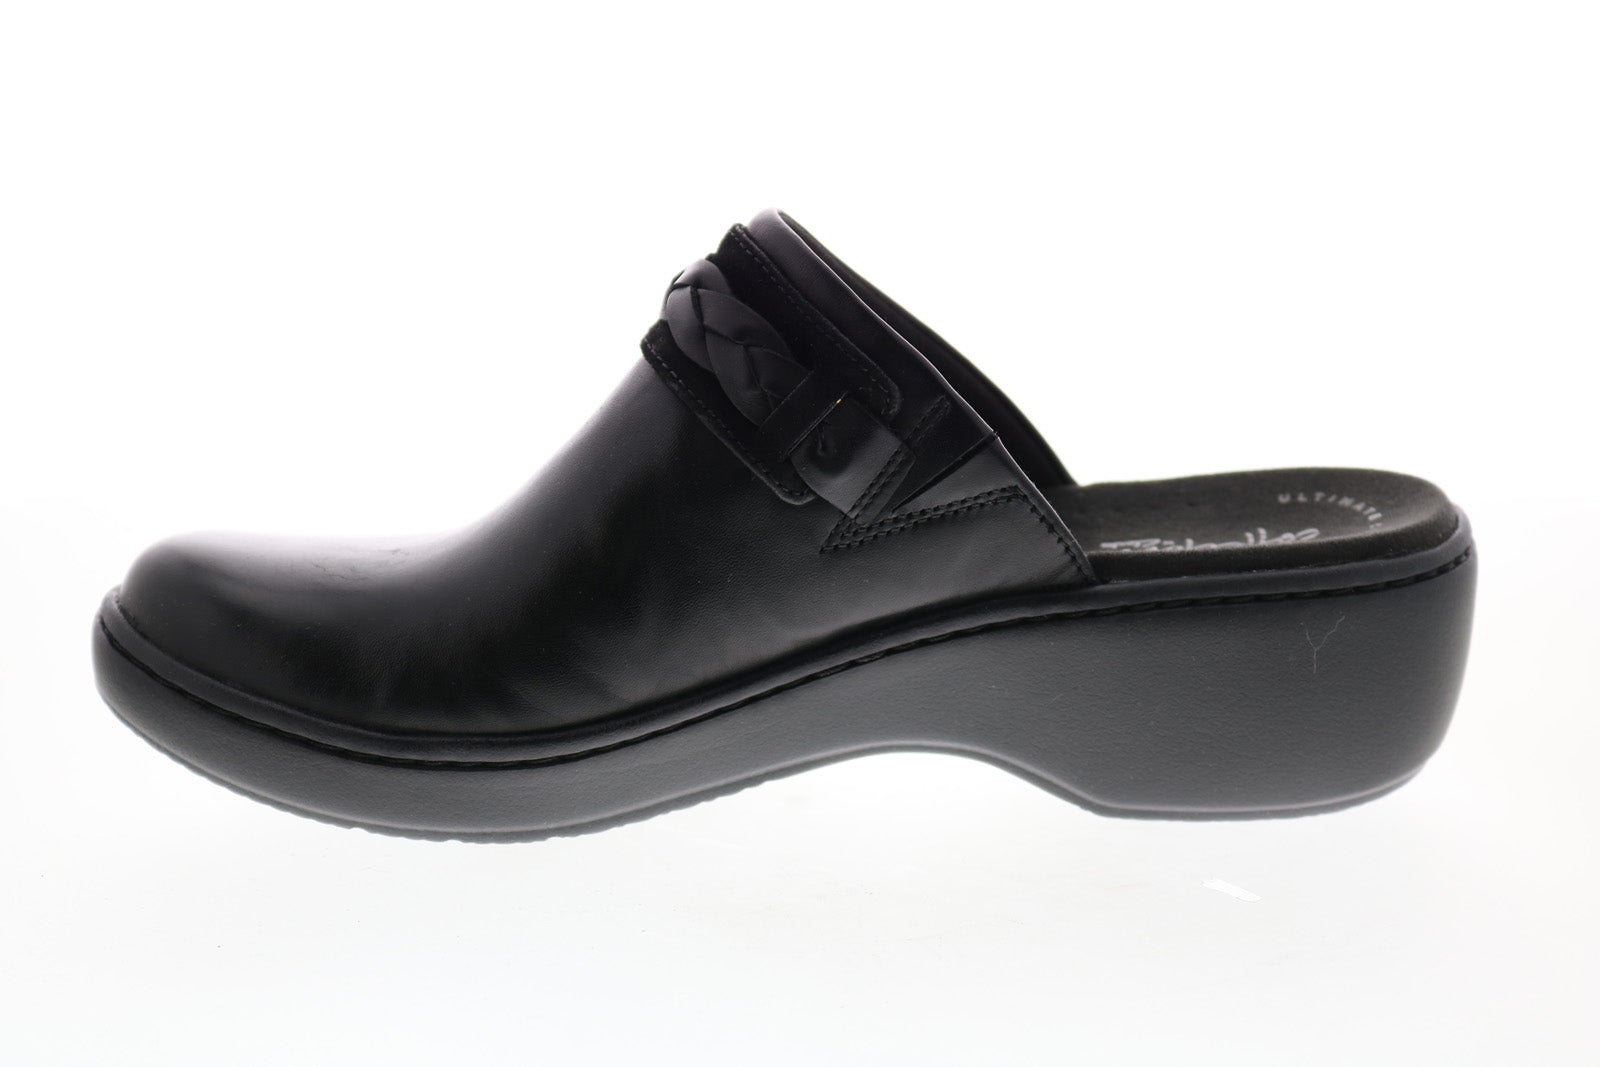 Clarks Abbey 26136262 Womens Black Leather Clog Flats Shoes Ruze Shoes